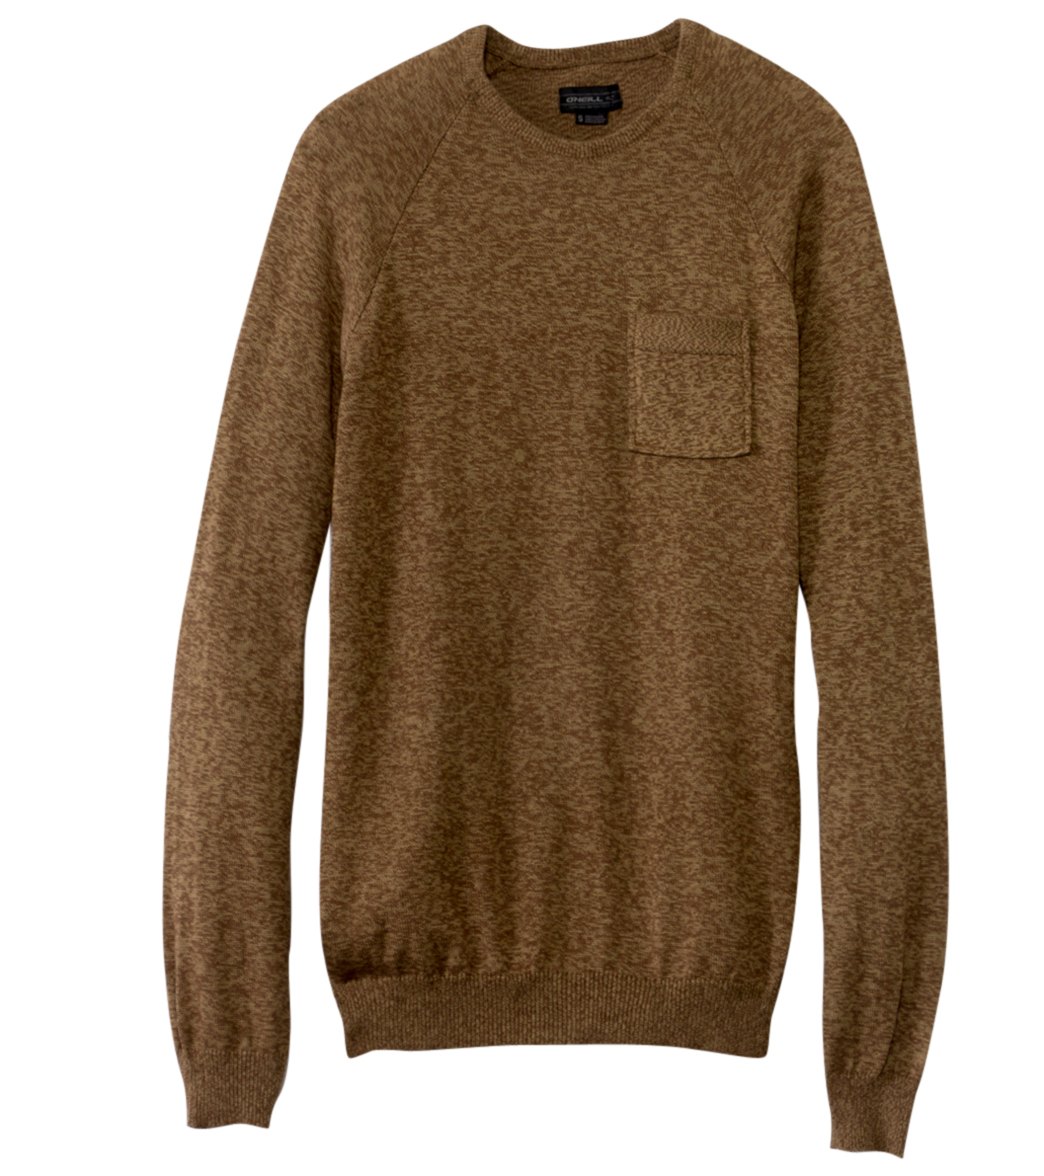 O'neill Men's Presidio Long Sleeve Sweater - Khaki Small Cotton - Swimoutlet.com